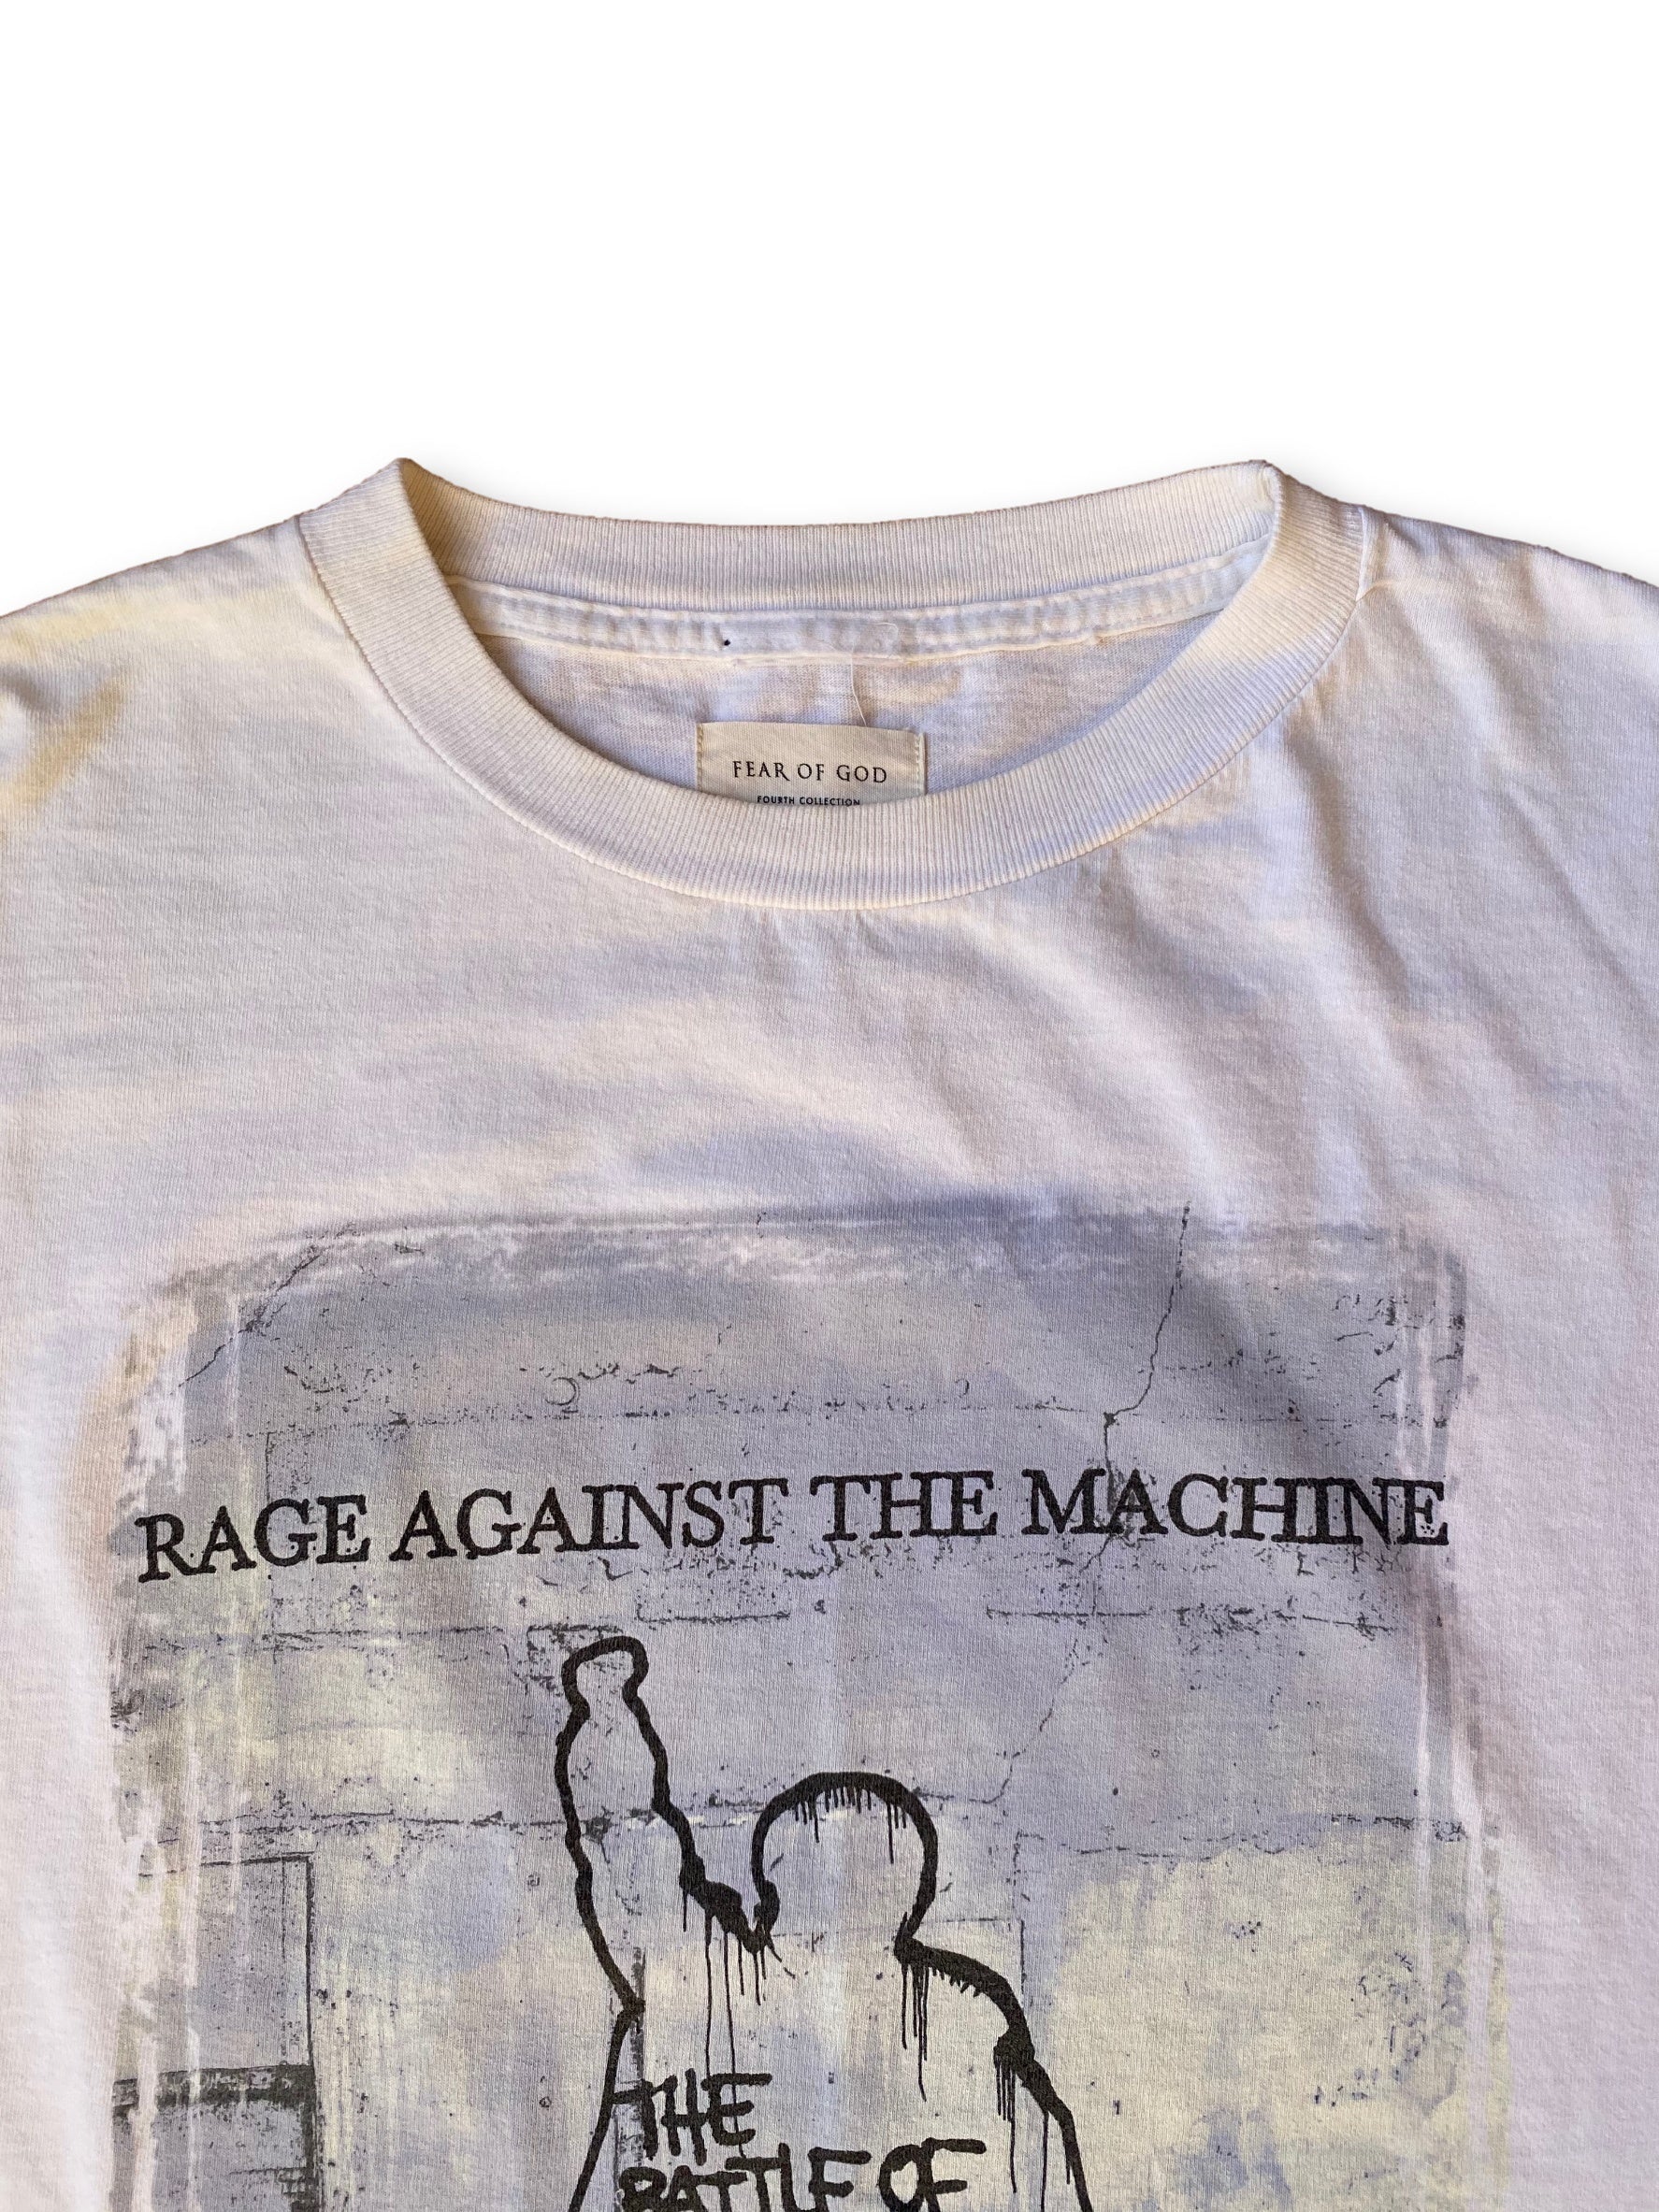 Vintage Rage Against The Machine x Fear of God Rock T-Shirt (UNION Los Angeles Exclusive) - XL